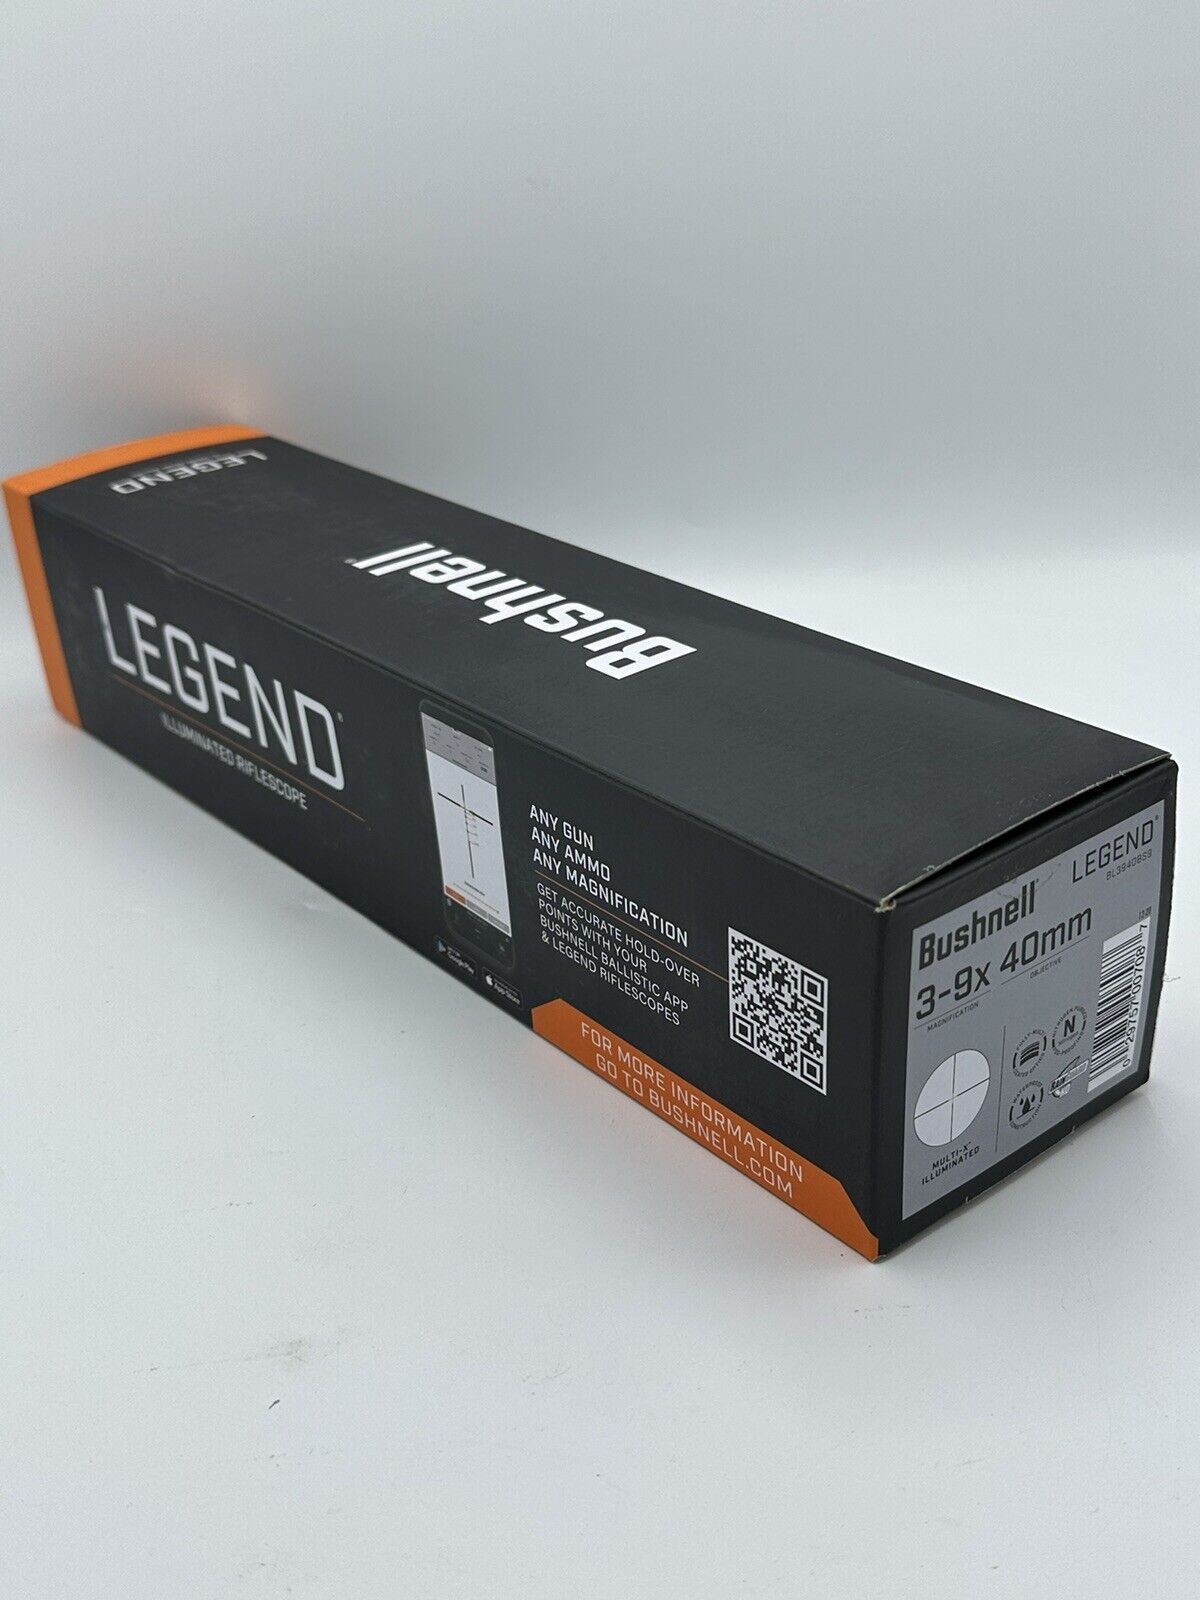 Bushnell Legend 3-9x40mm Multi-X Illuminated Reticle Scope Matte Black BL3940BS9